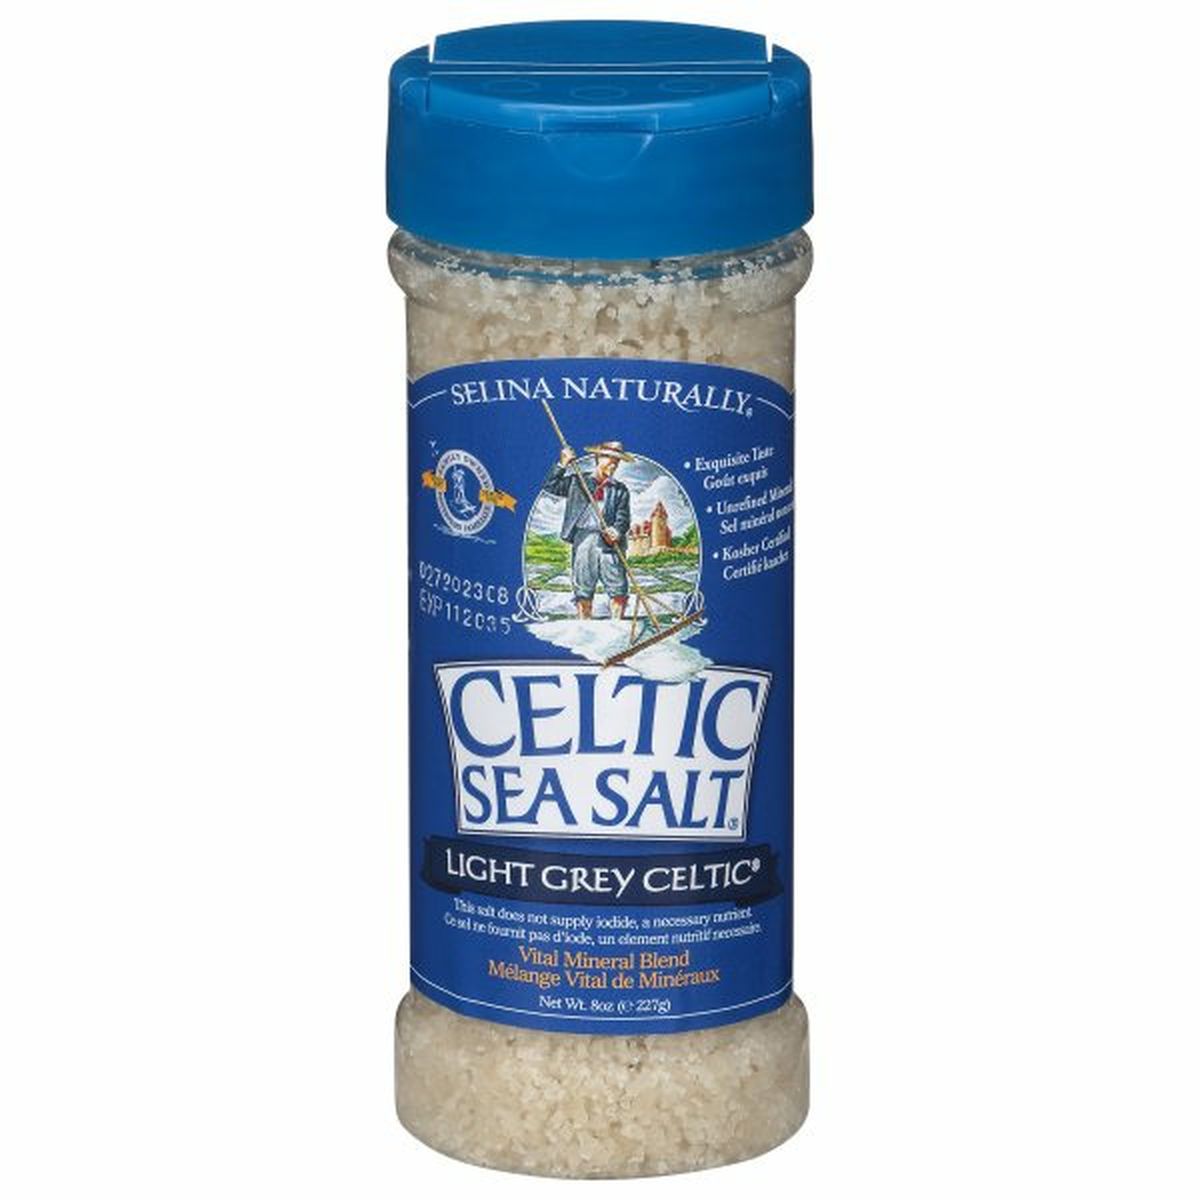 Calories in Celtic Sea Salt Sea Salt, Light Grey Celtic, Vital Mineral Blend